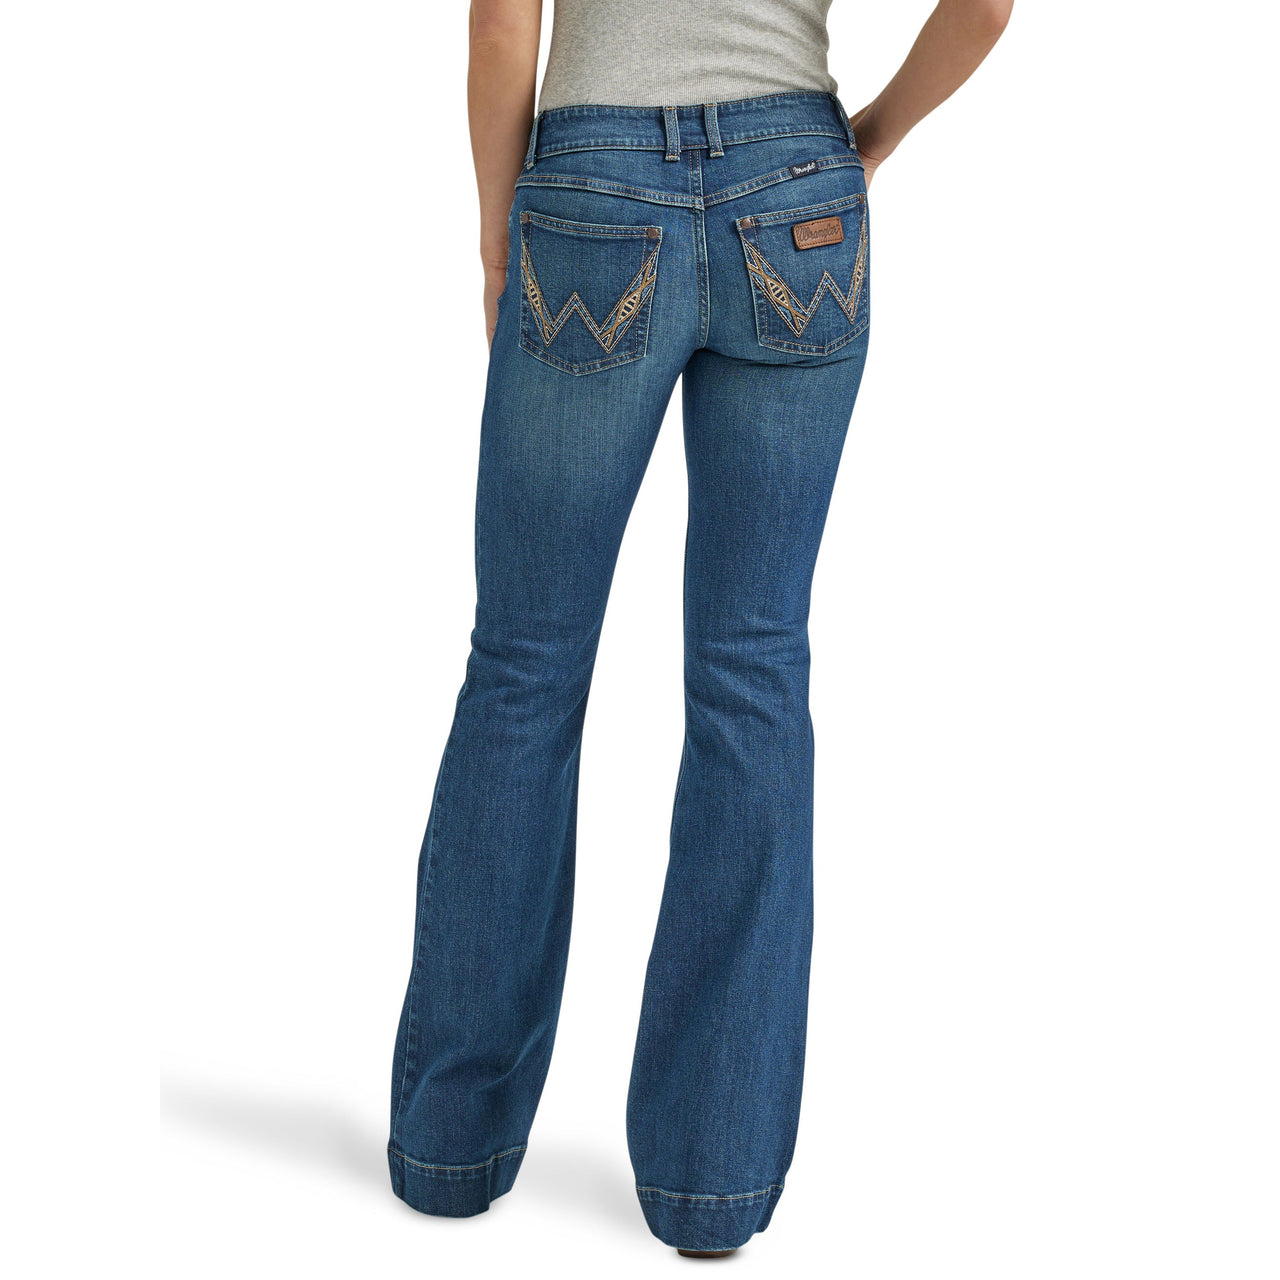 Wrangler Women's Retro Sadie Low Rise Bootcut Jeans - Faithlyn